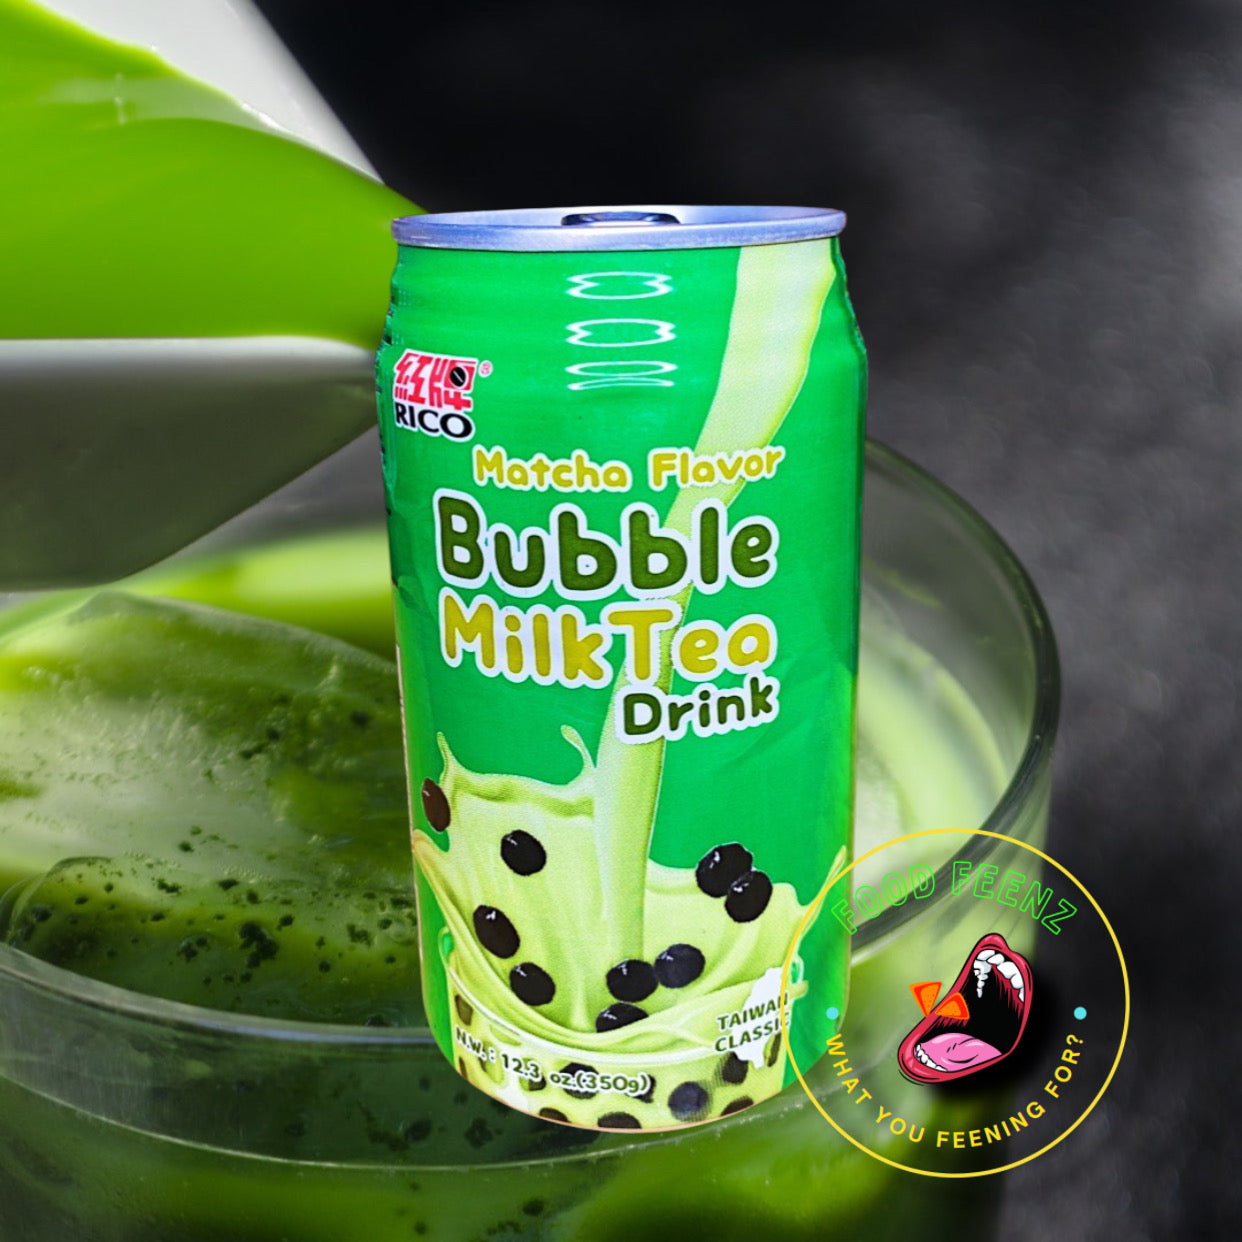 Rico Bubble Milk Tea Drink Matcha Flavor (Taiwan)